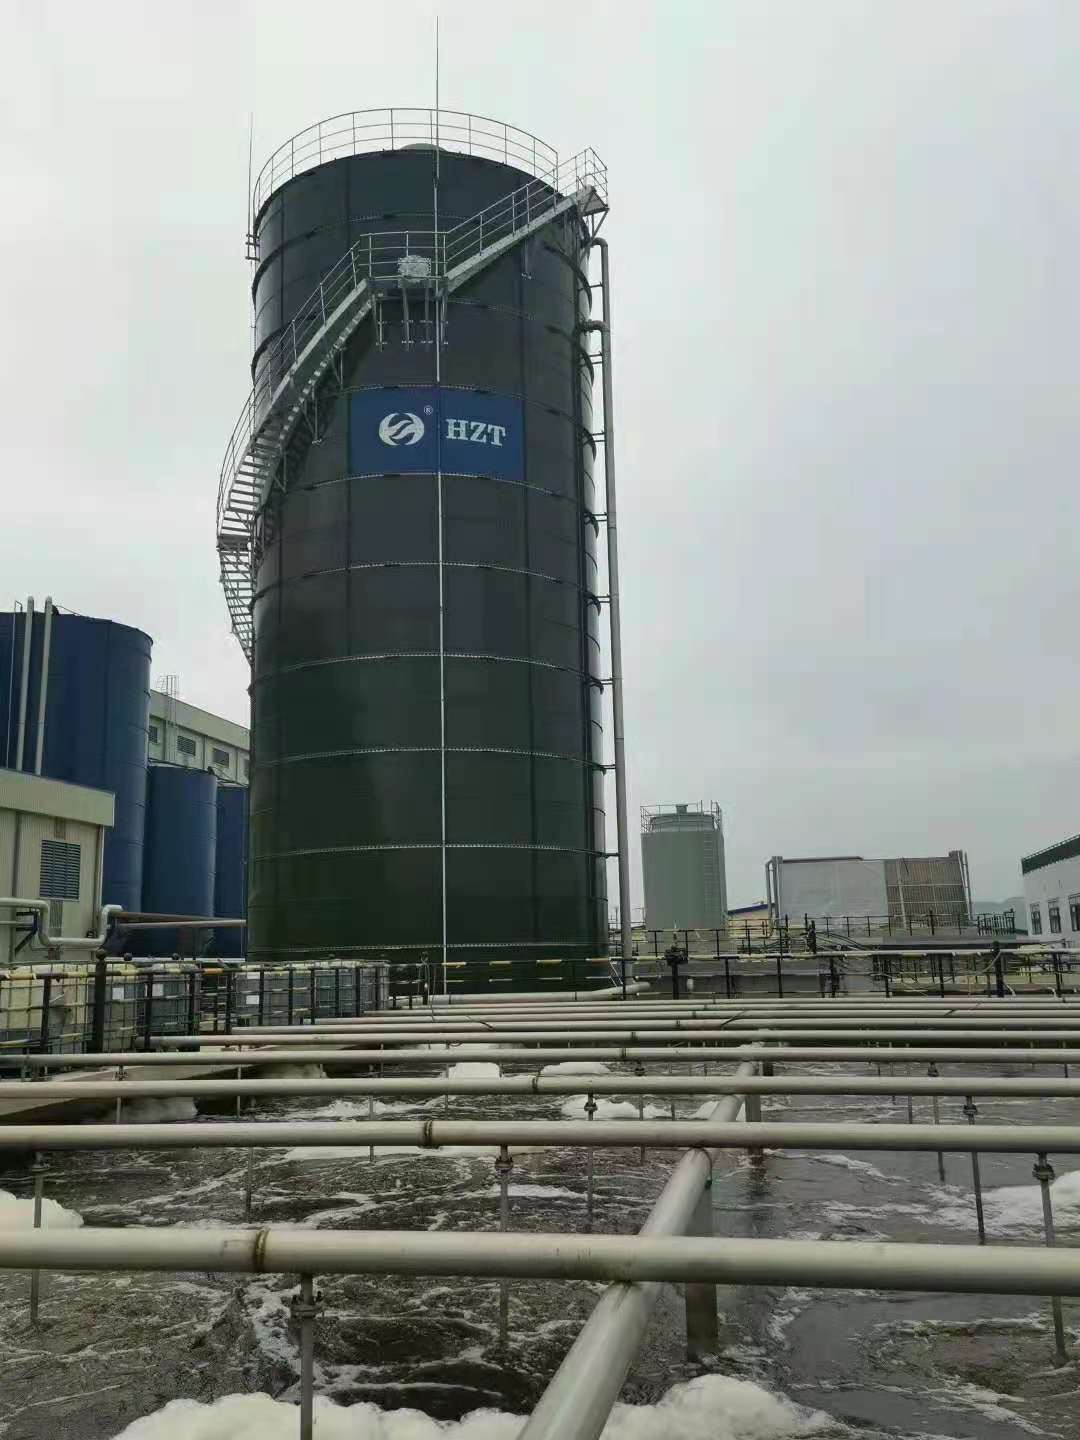 IC tower in Vietnam